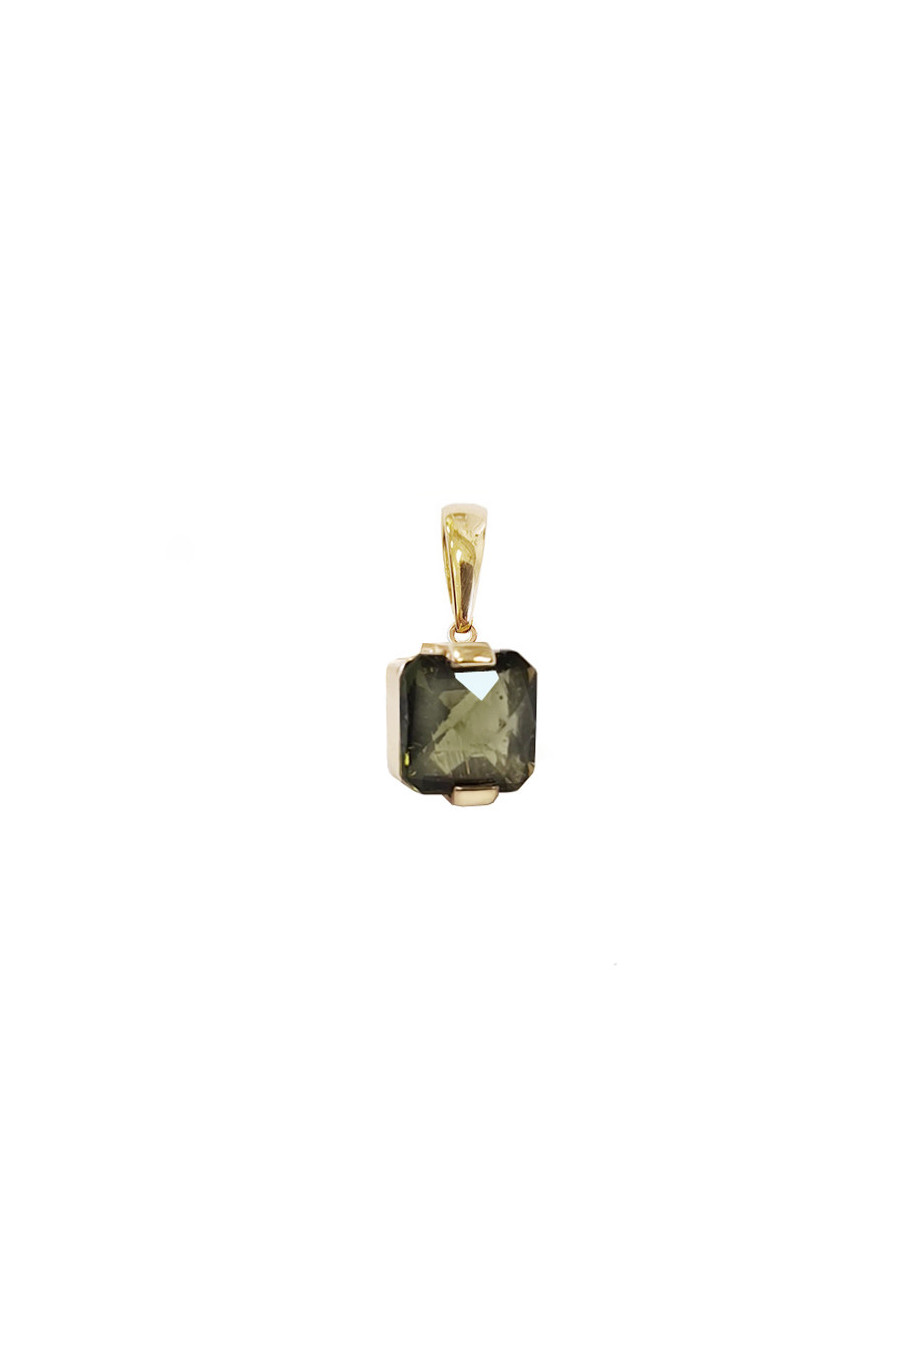 Gold pendant, moldavite